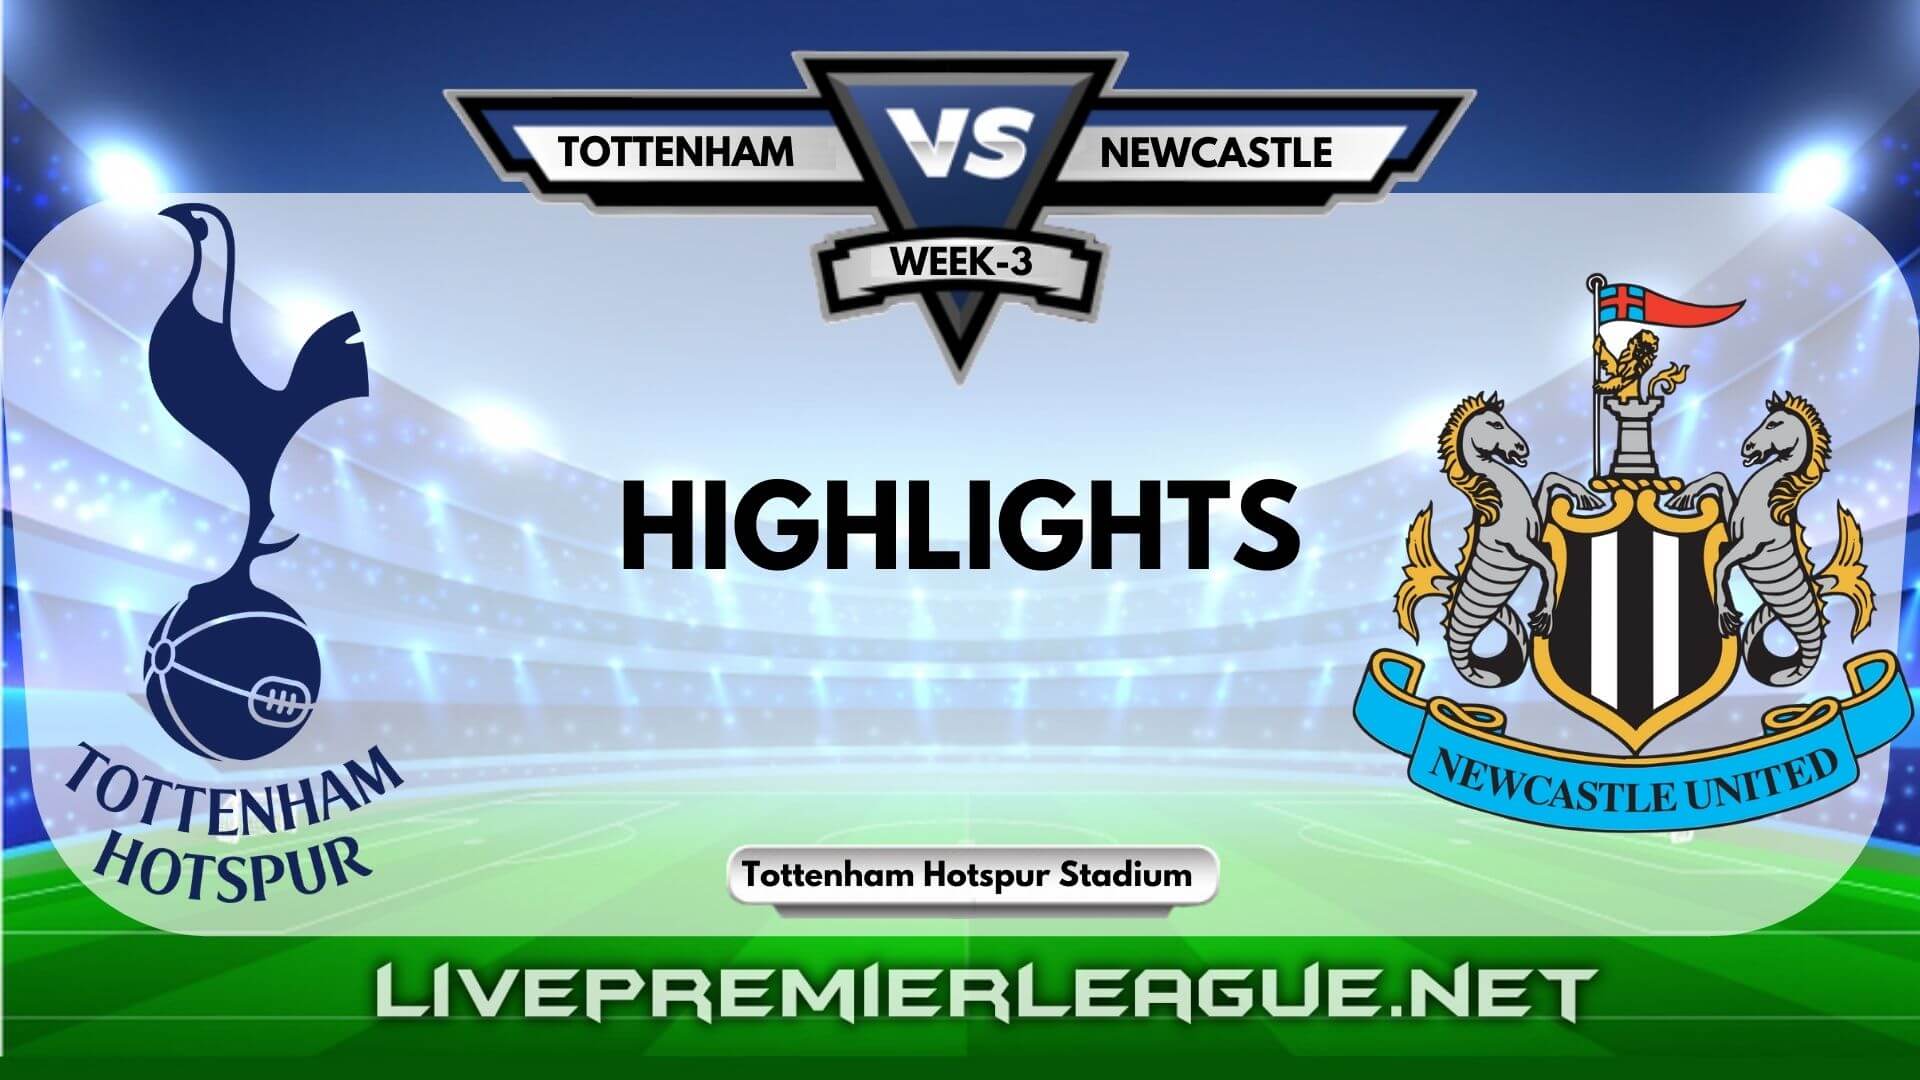 Tottenham Hotspur Vs Newcastle United Highlights 2020 EPL Week 3